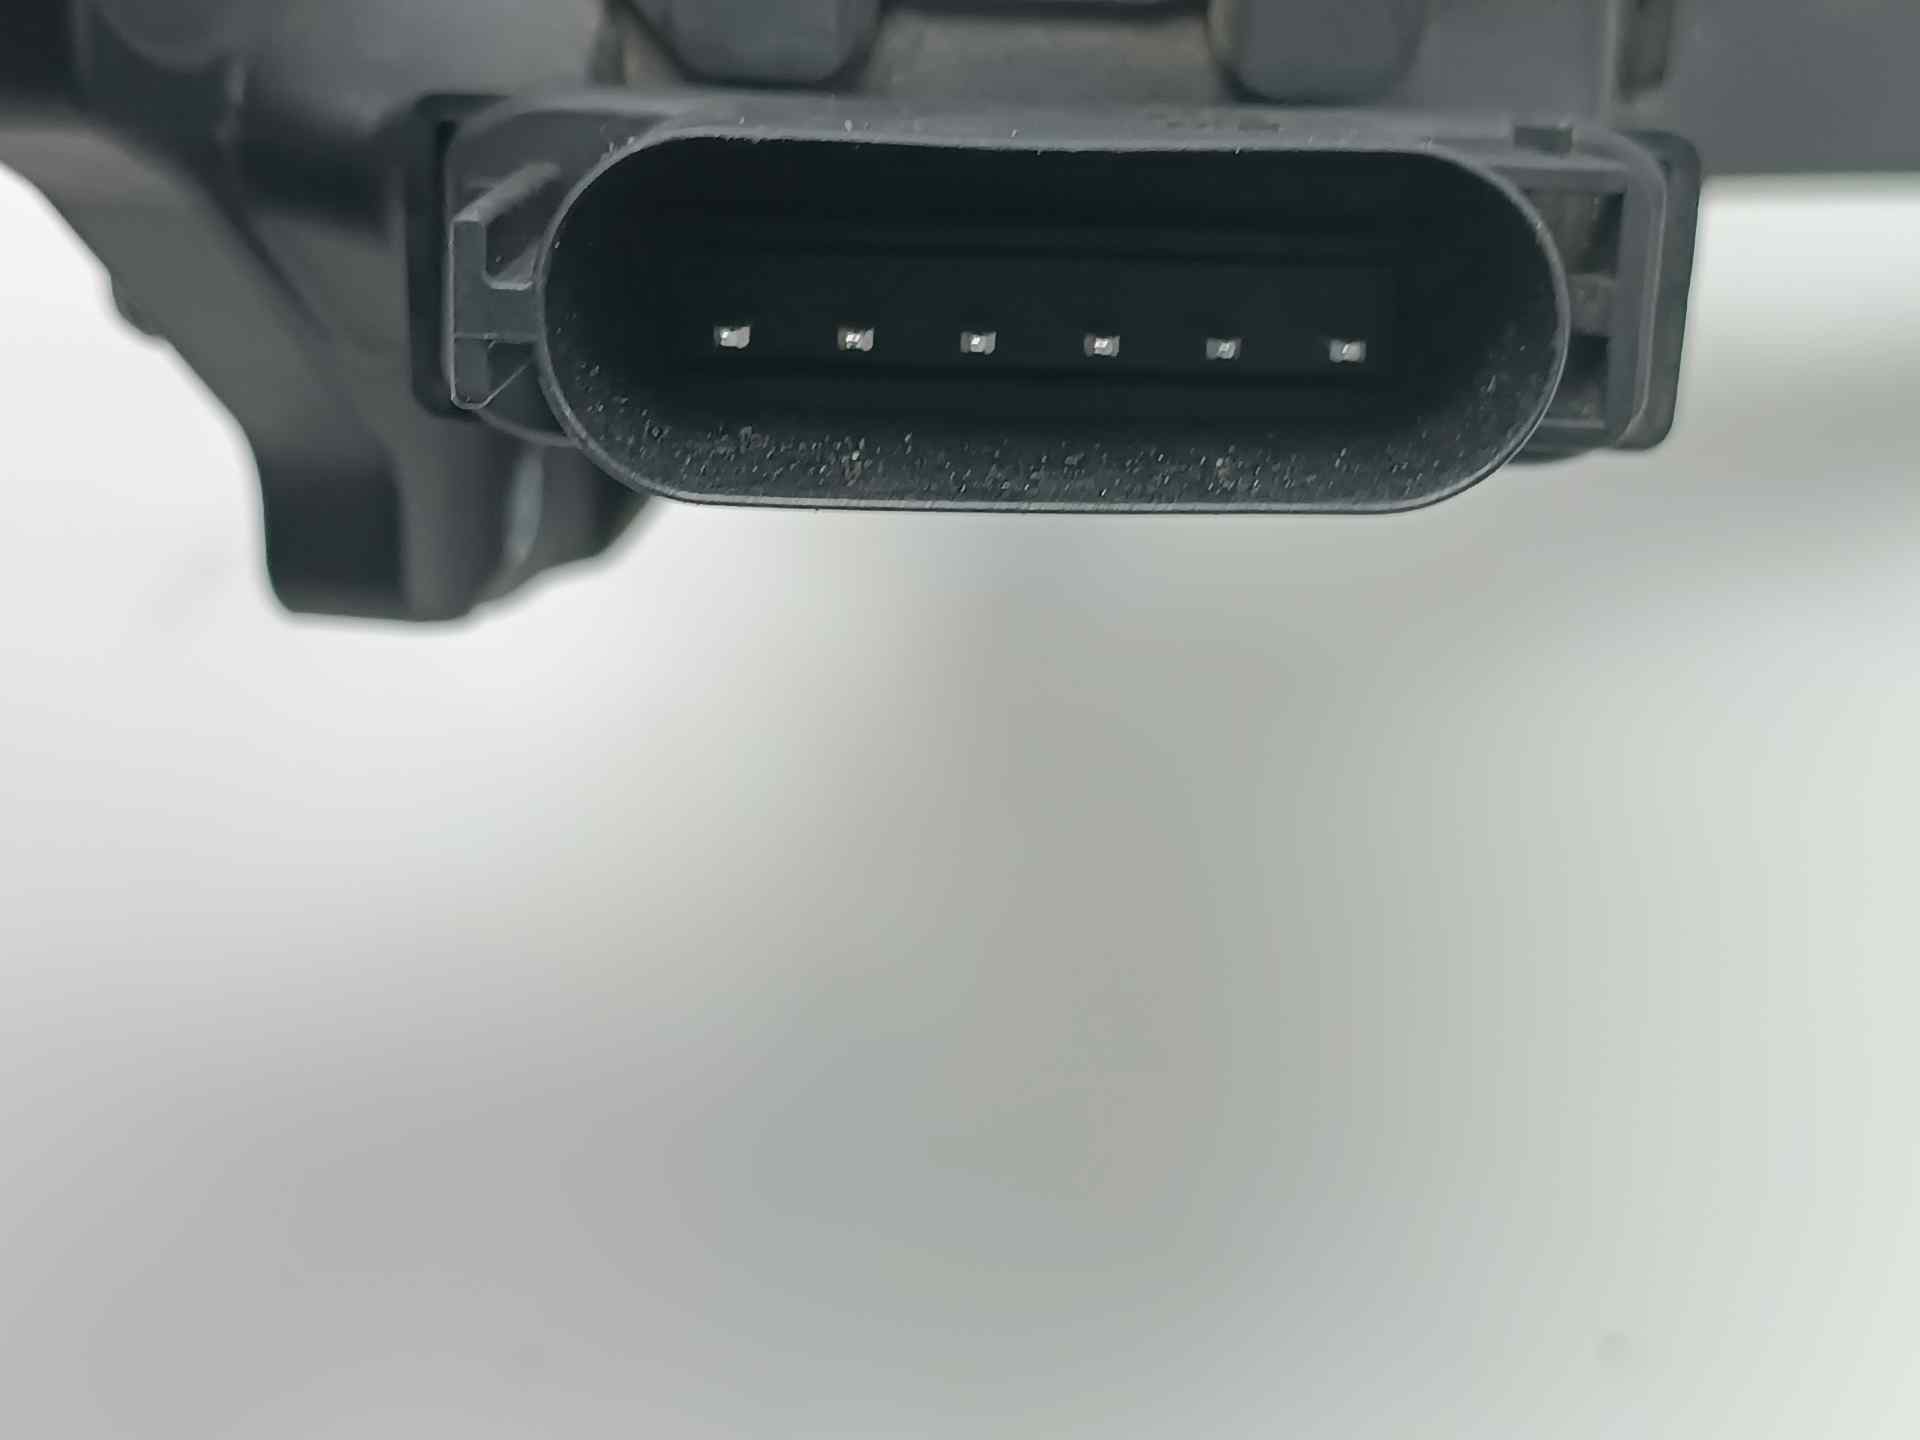 VOLVO XC90 1 generation (2002-2014) Throttle Pedal 30715177, 30715177, 6PV00954805 24584388